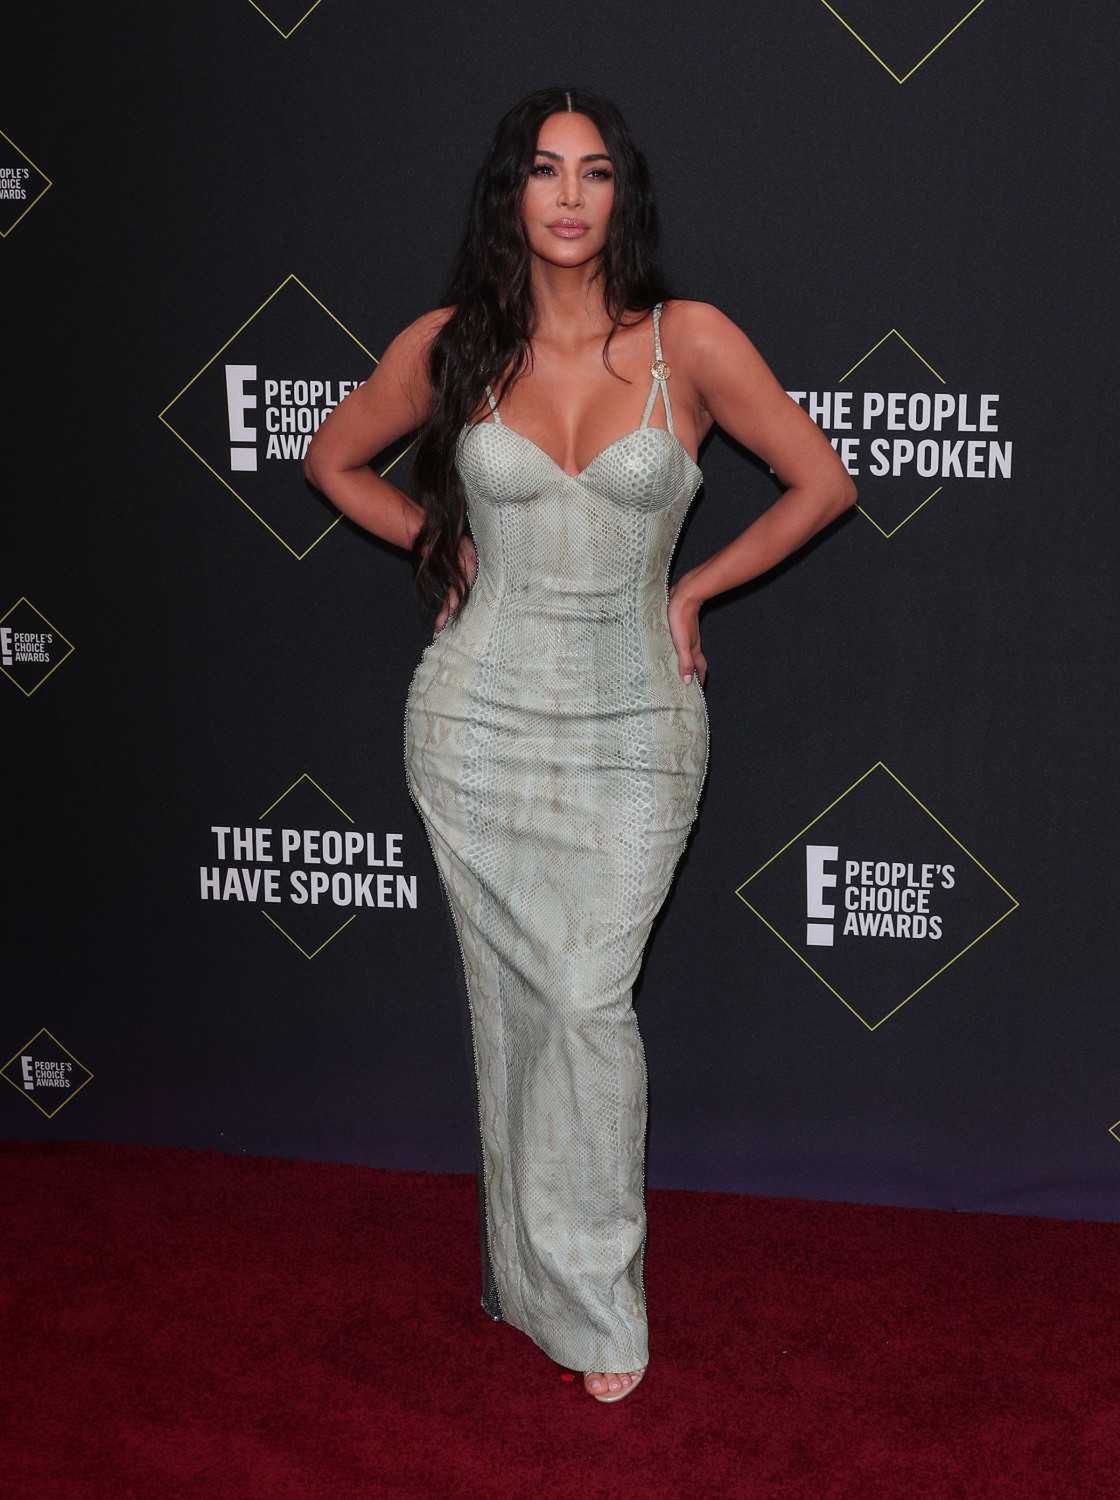 2019 People's Choice Awards - Kim Kardashian West